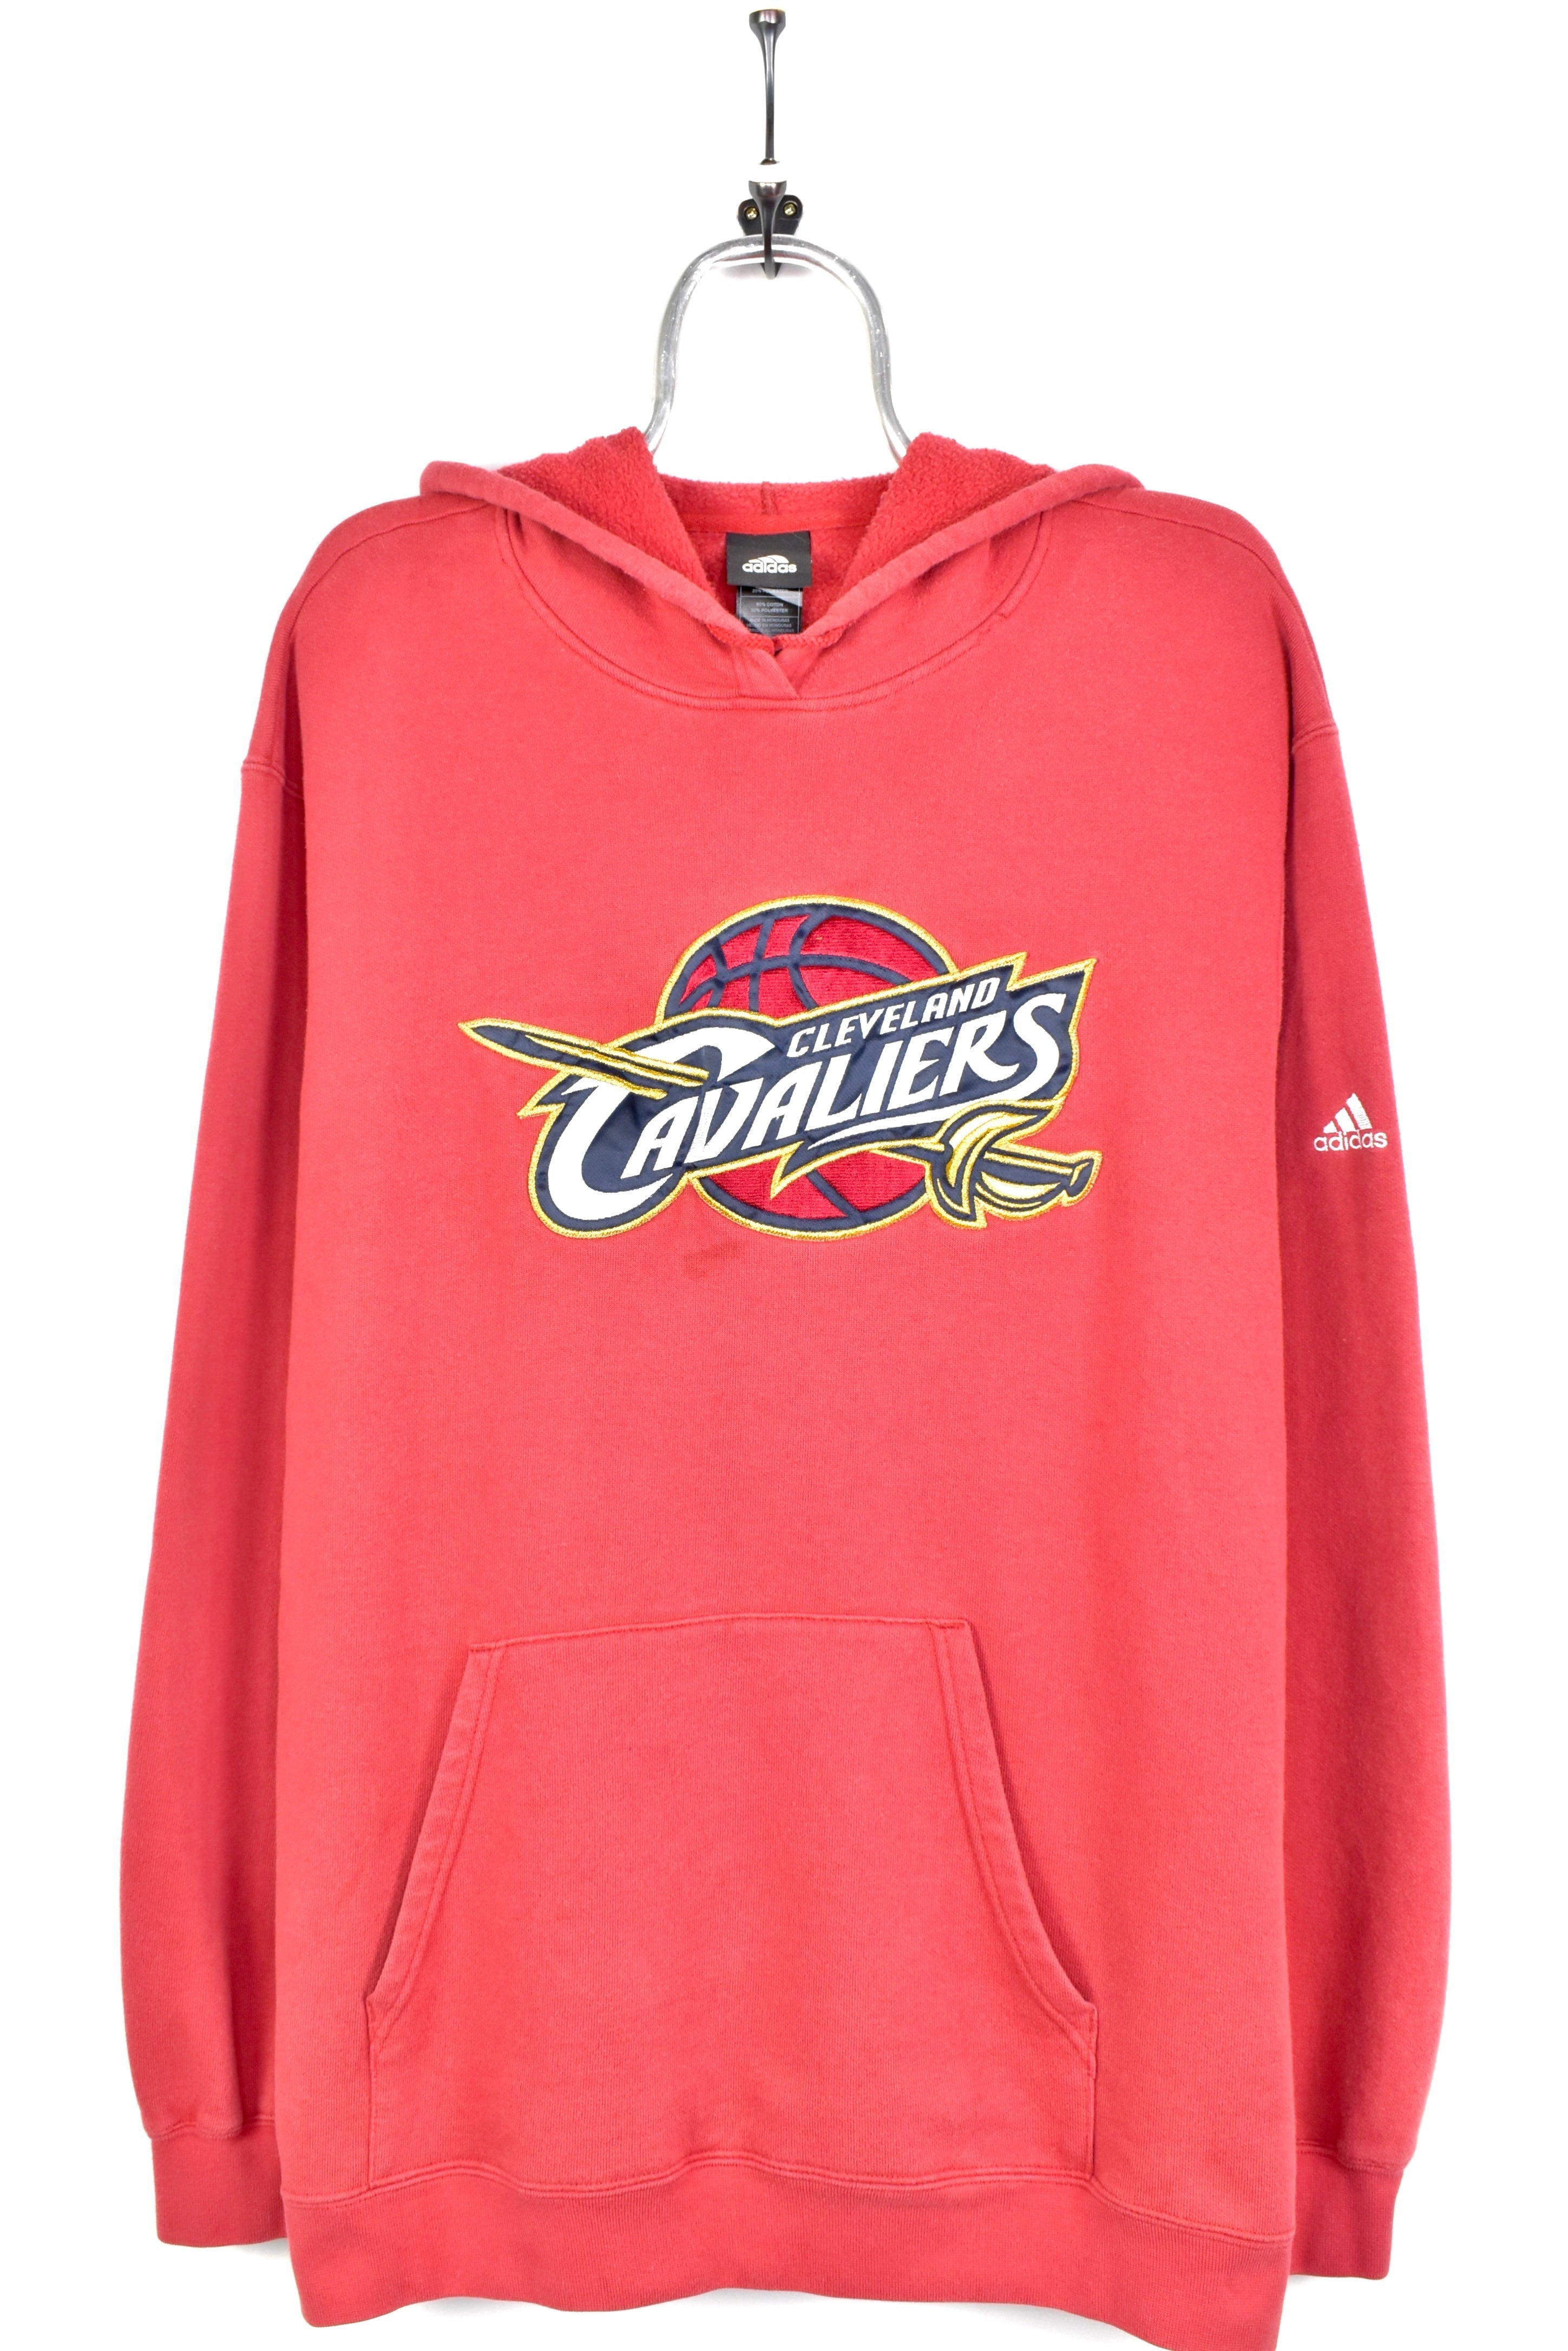 Cleveland Cavaliers Sweatshirt 